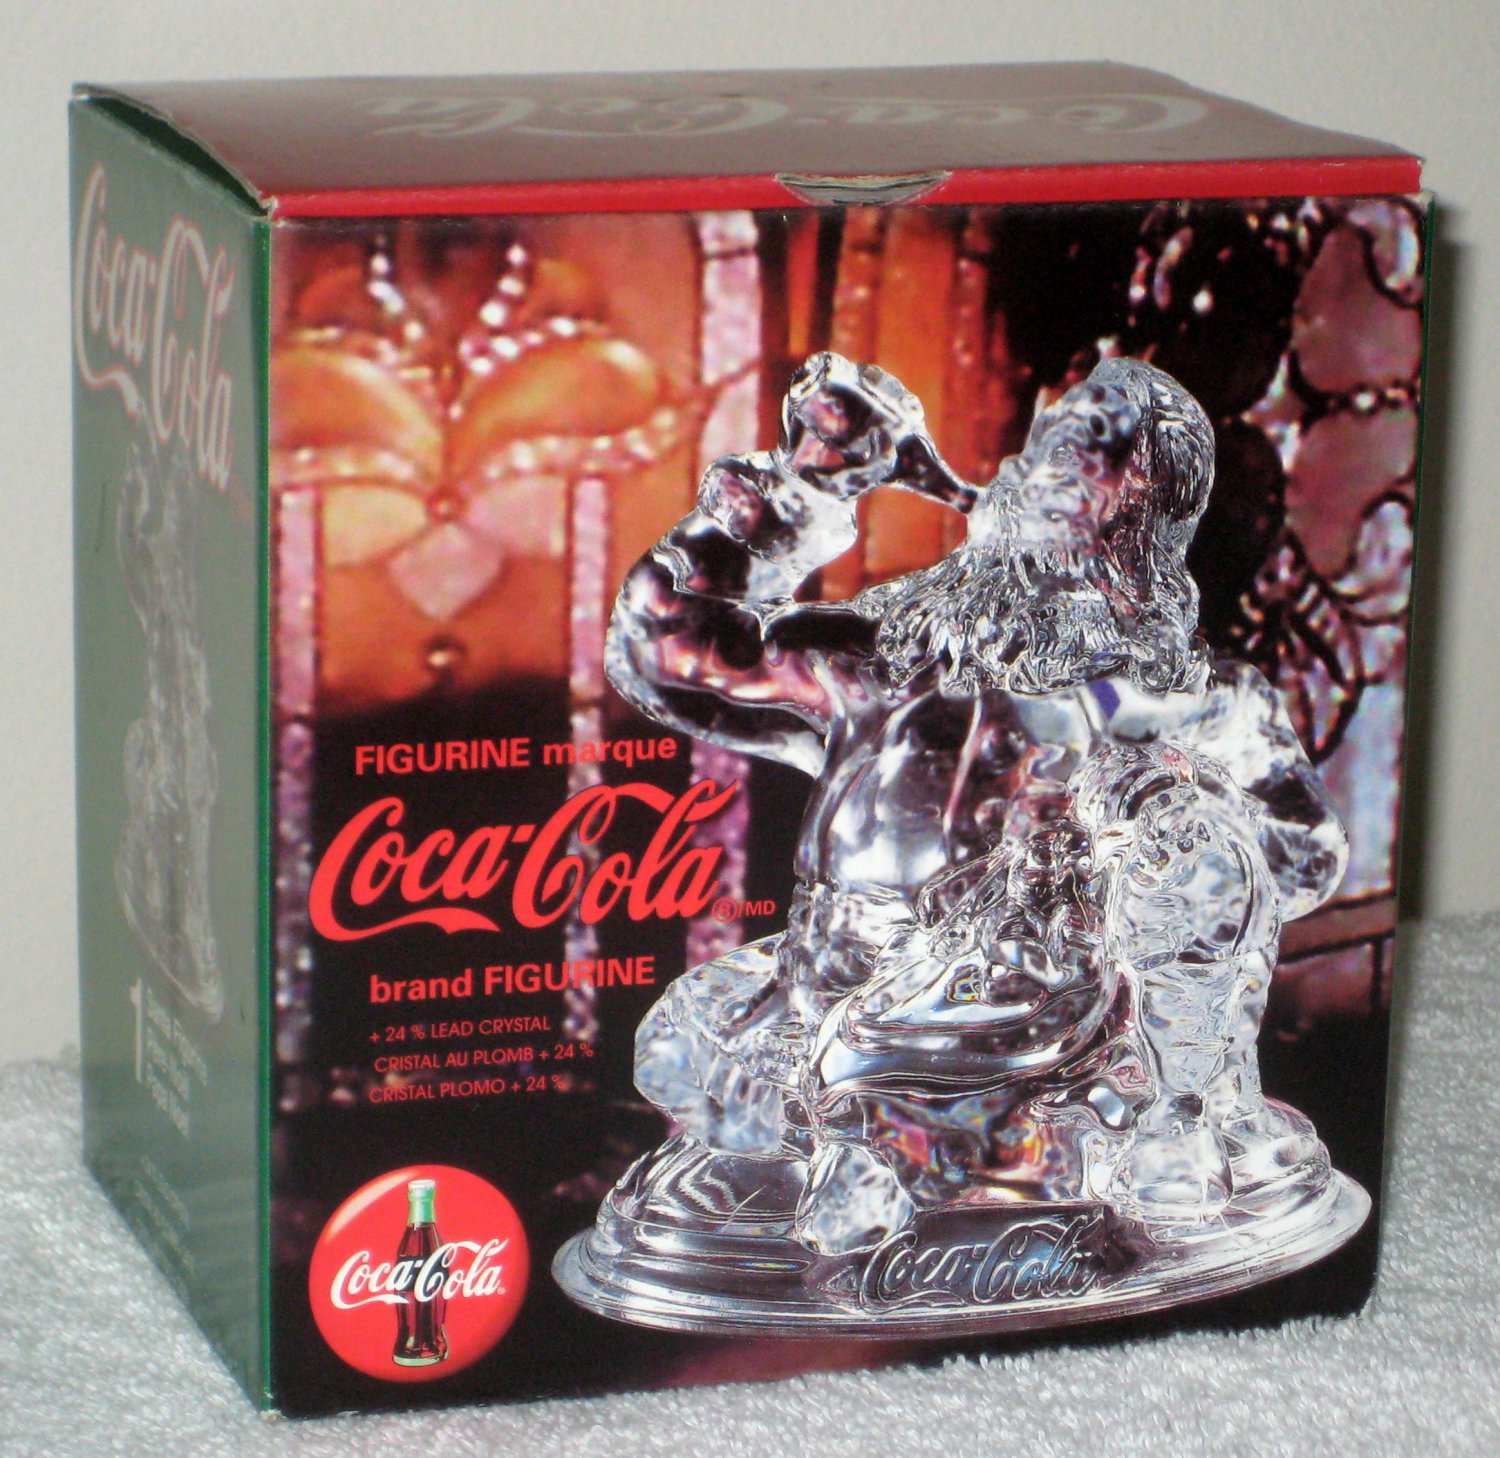 Coca-Cola Santa Claus 24% Lead Crystal Figurine Coke with Box 1999